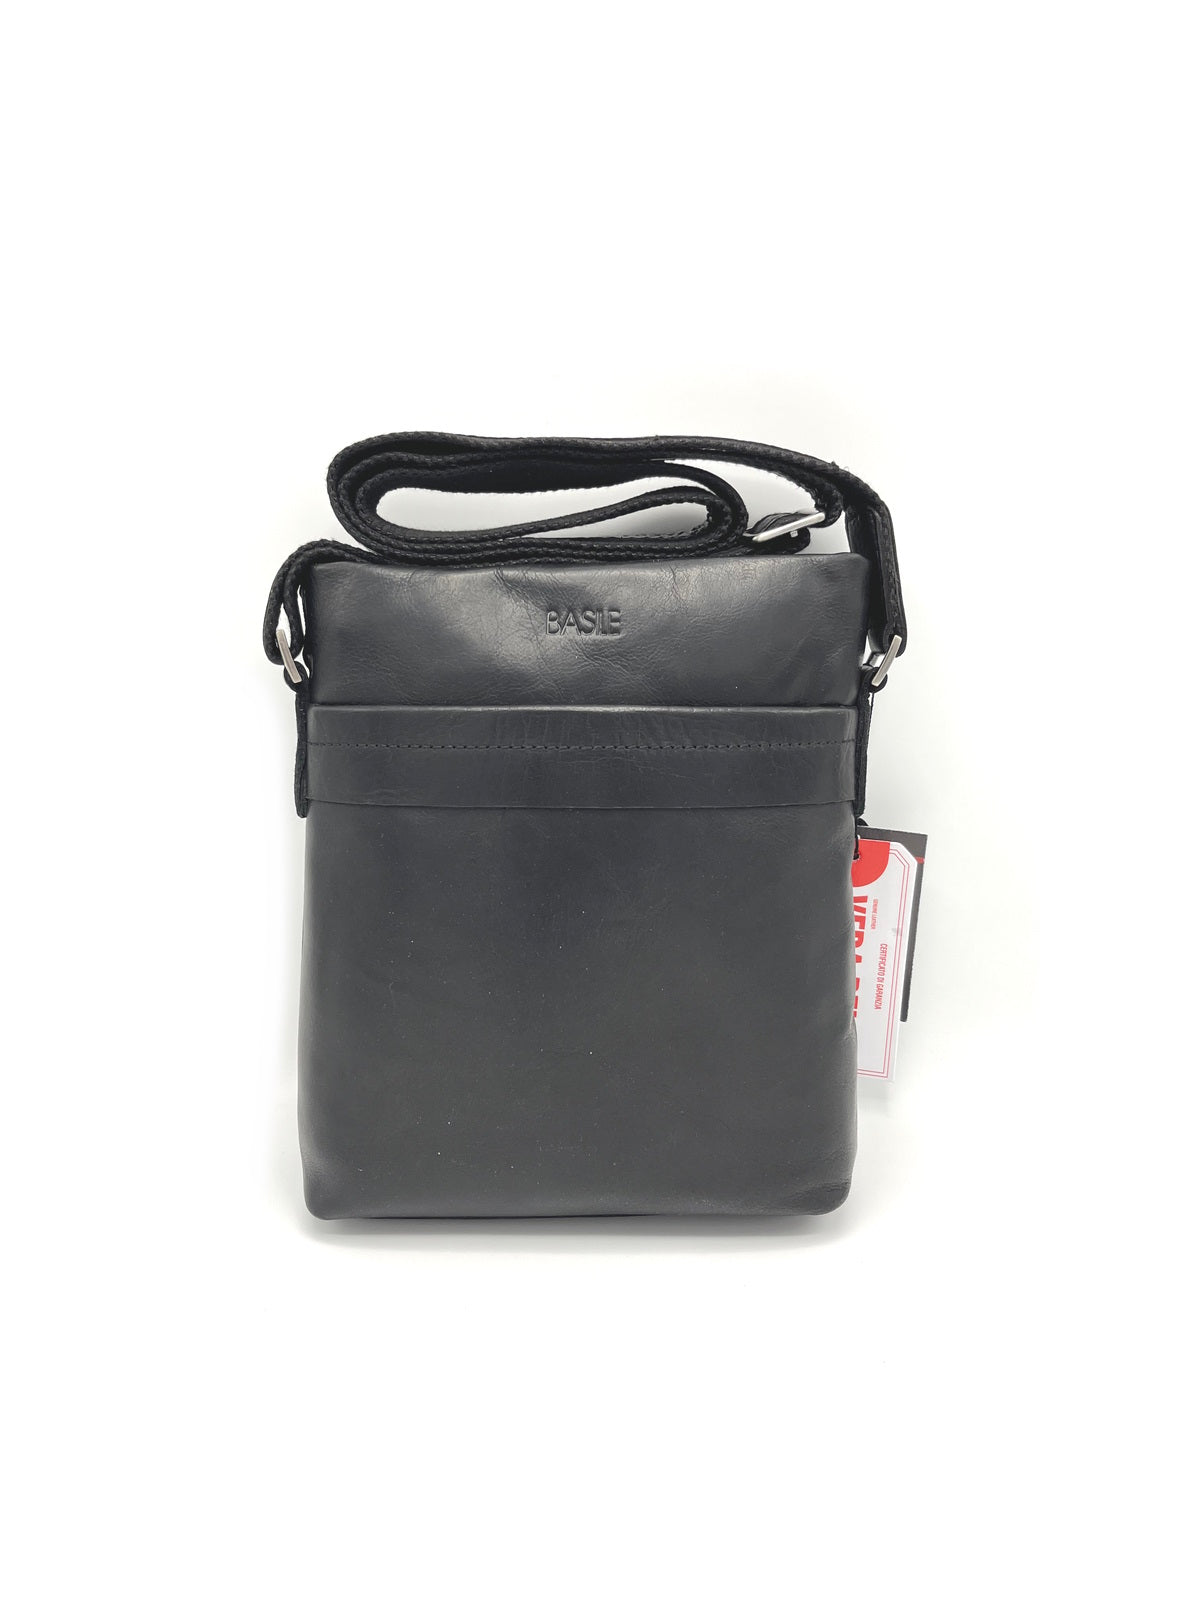 Brand Basile, Genuine Leather Messenger Bag, for men, art. 2883TI.392